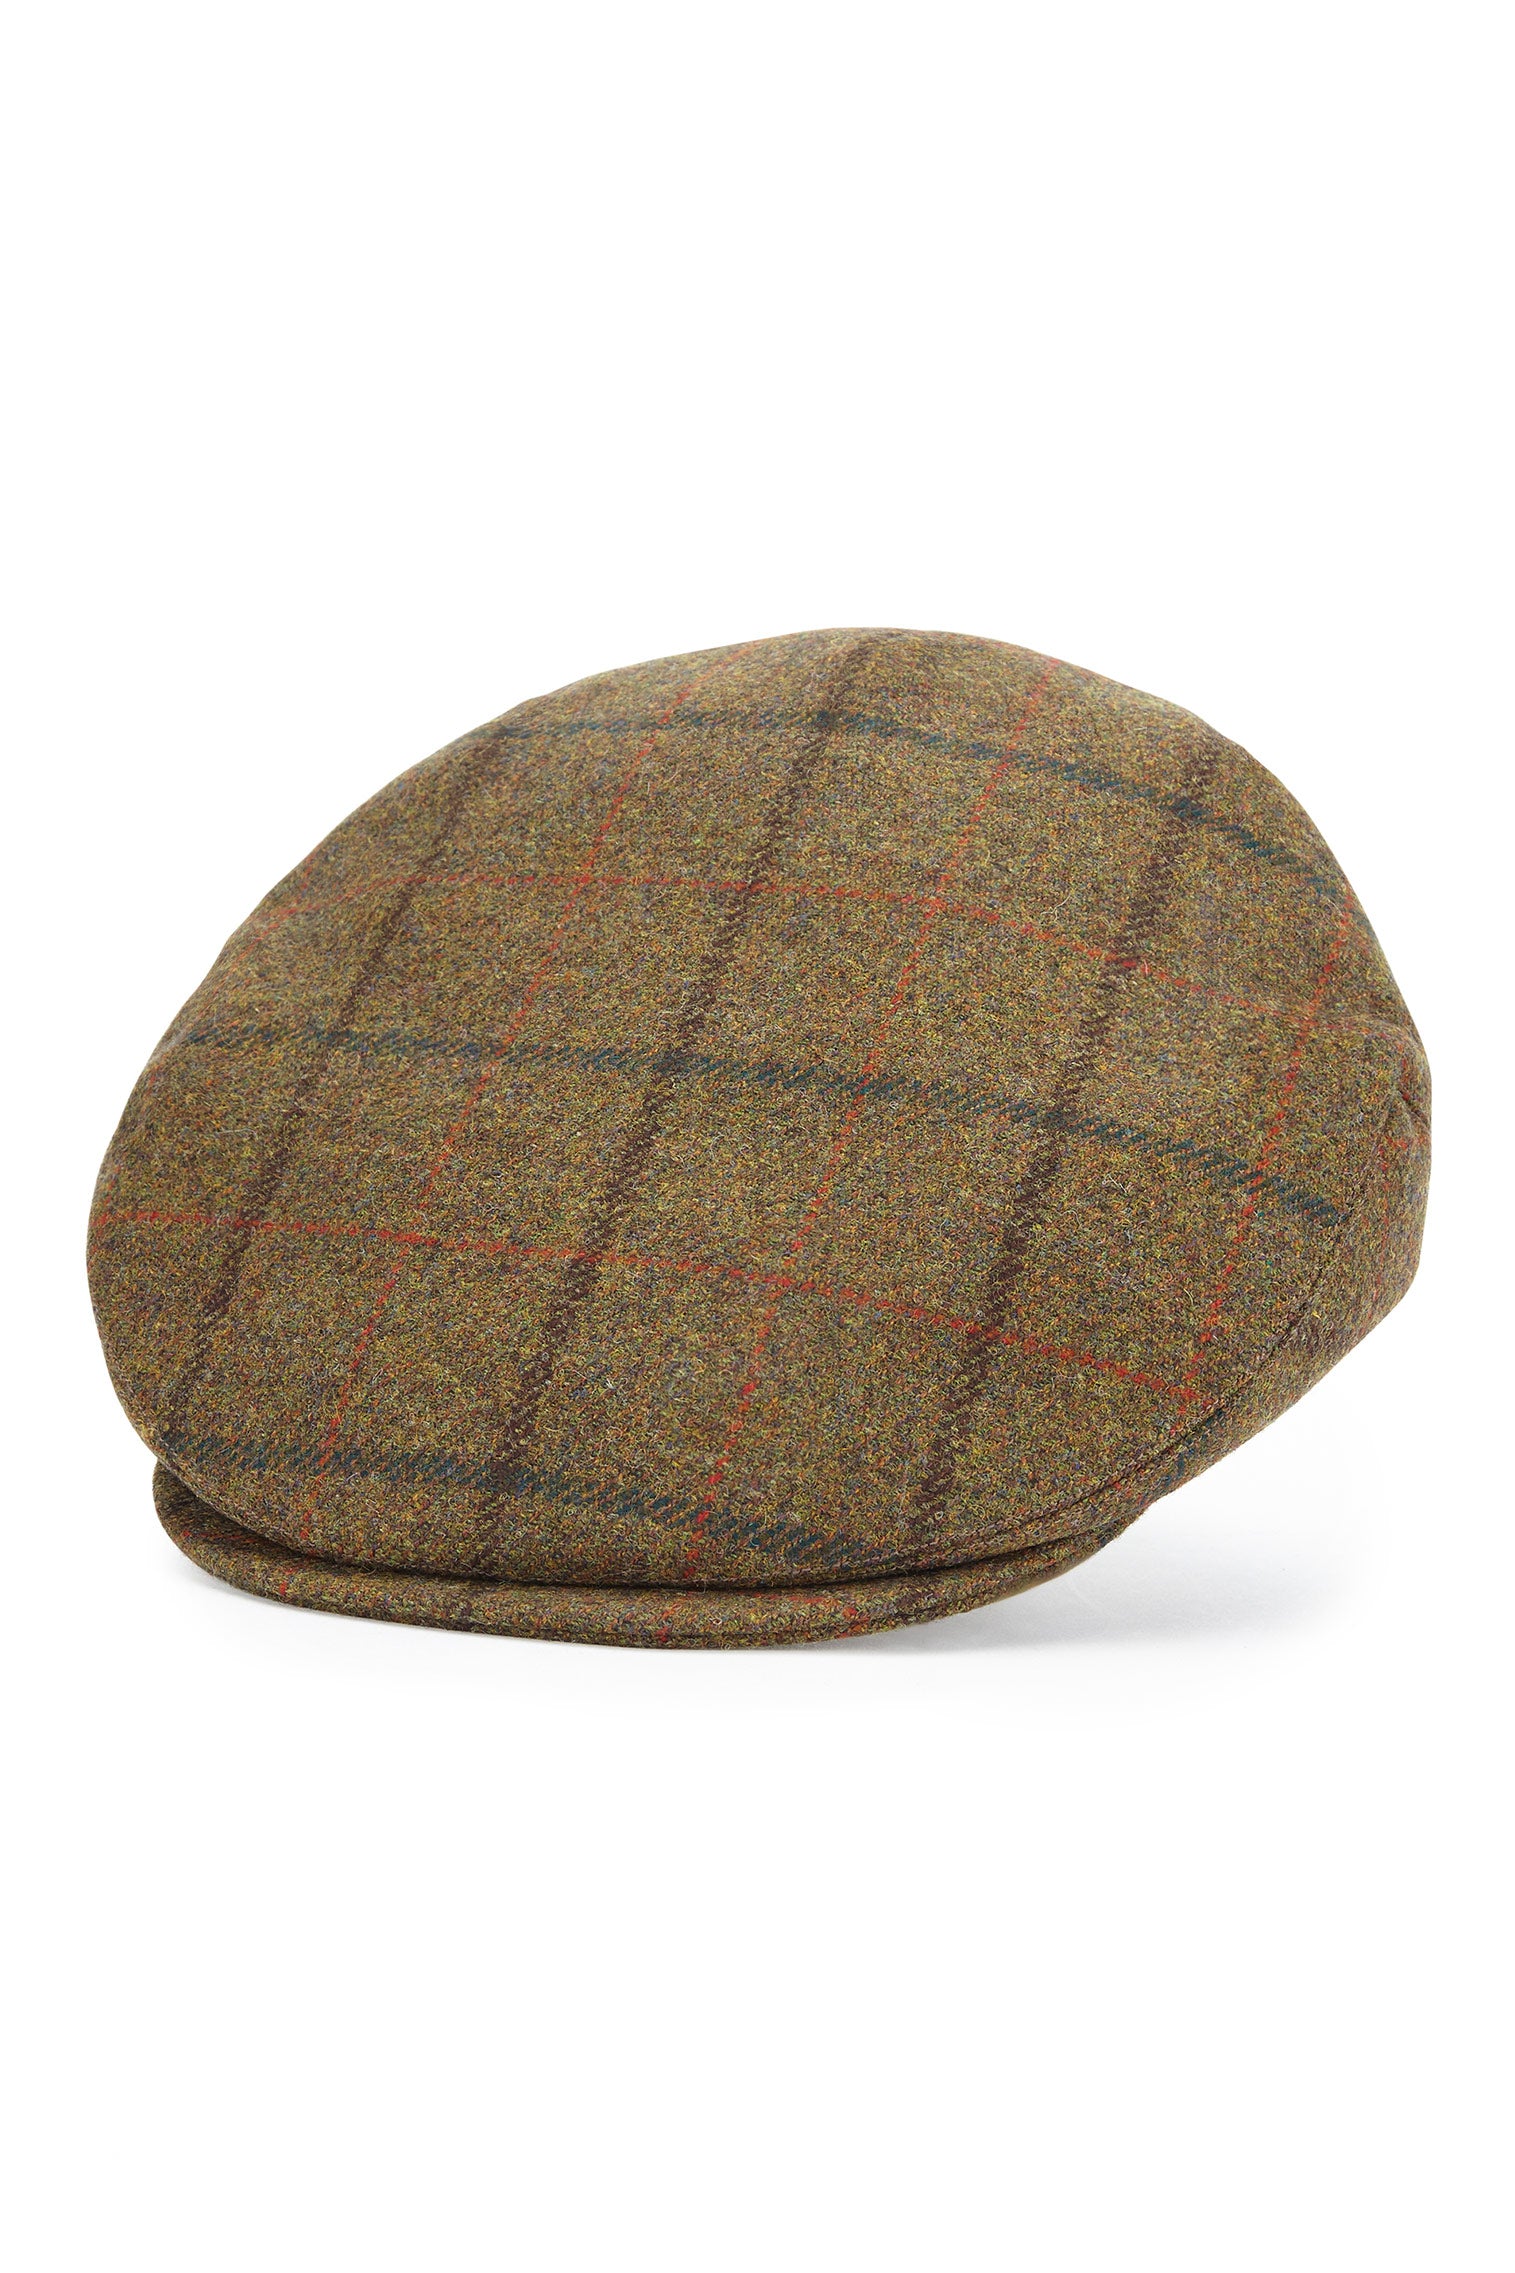 Turnberry Tweed Flat Cap - Men's & Women's Flat Caps - Lock & Co. Hatters London UK